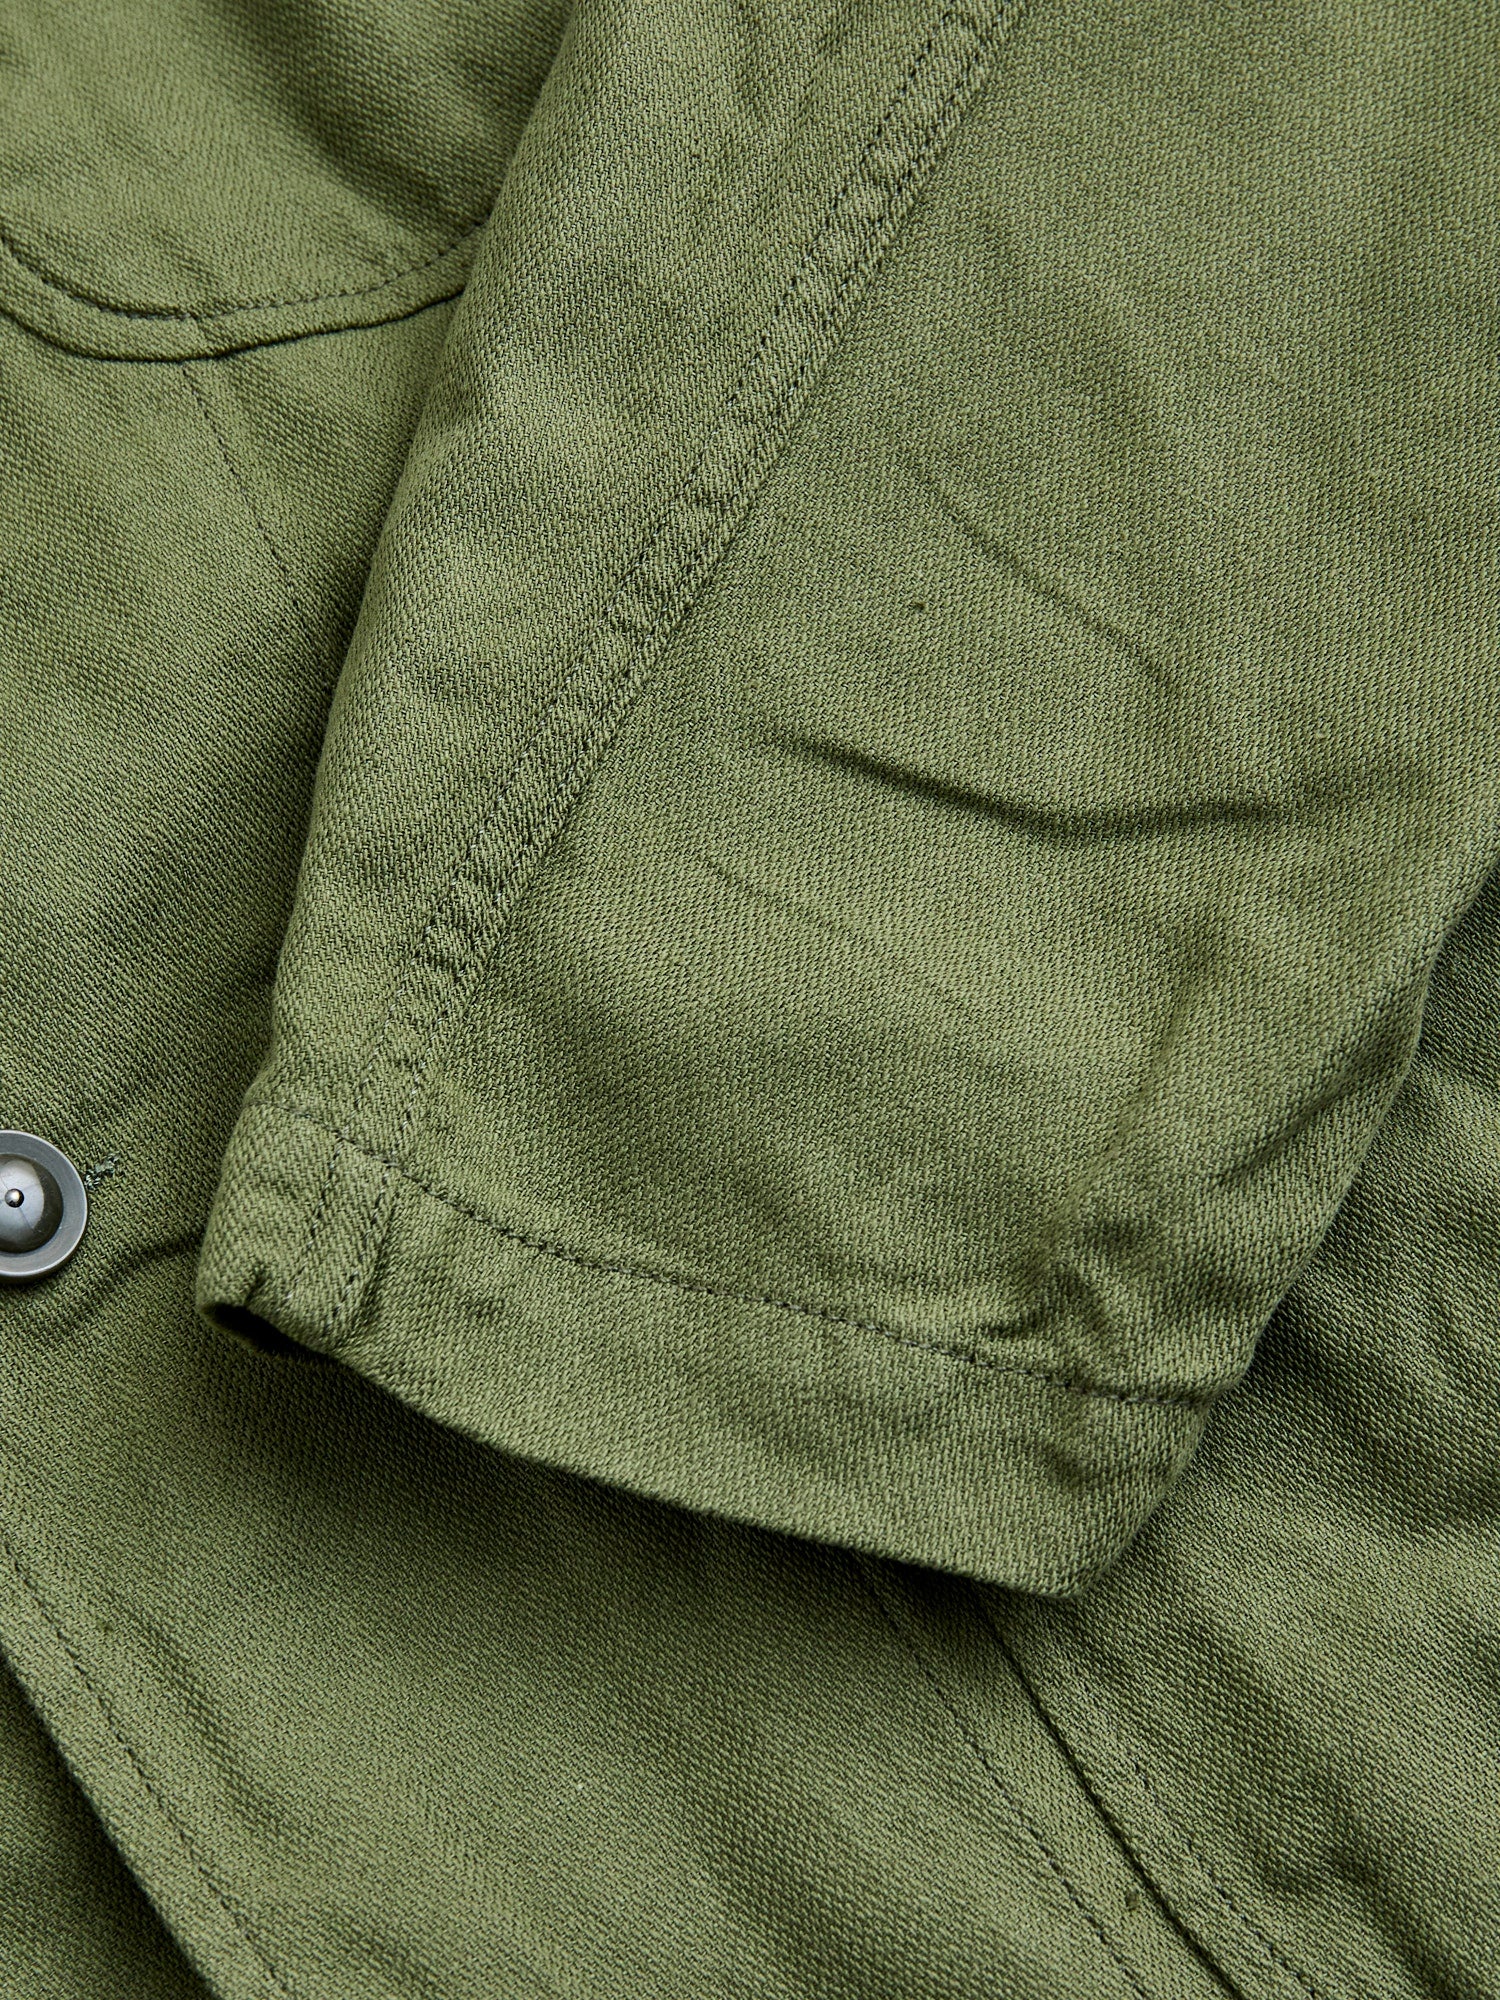 Bedford Jacket in Olive Cotton Hemp Satin - 9